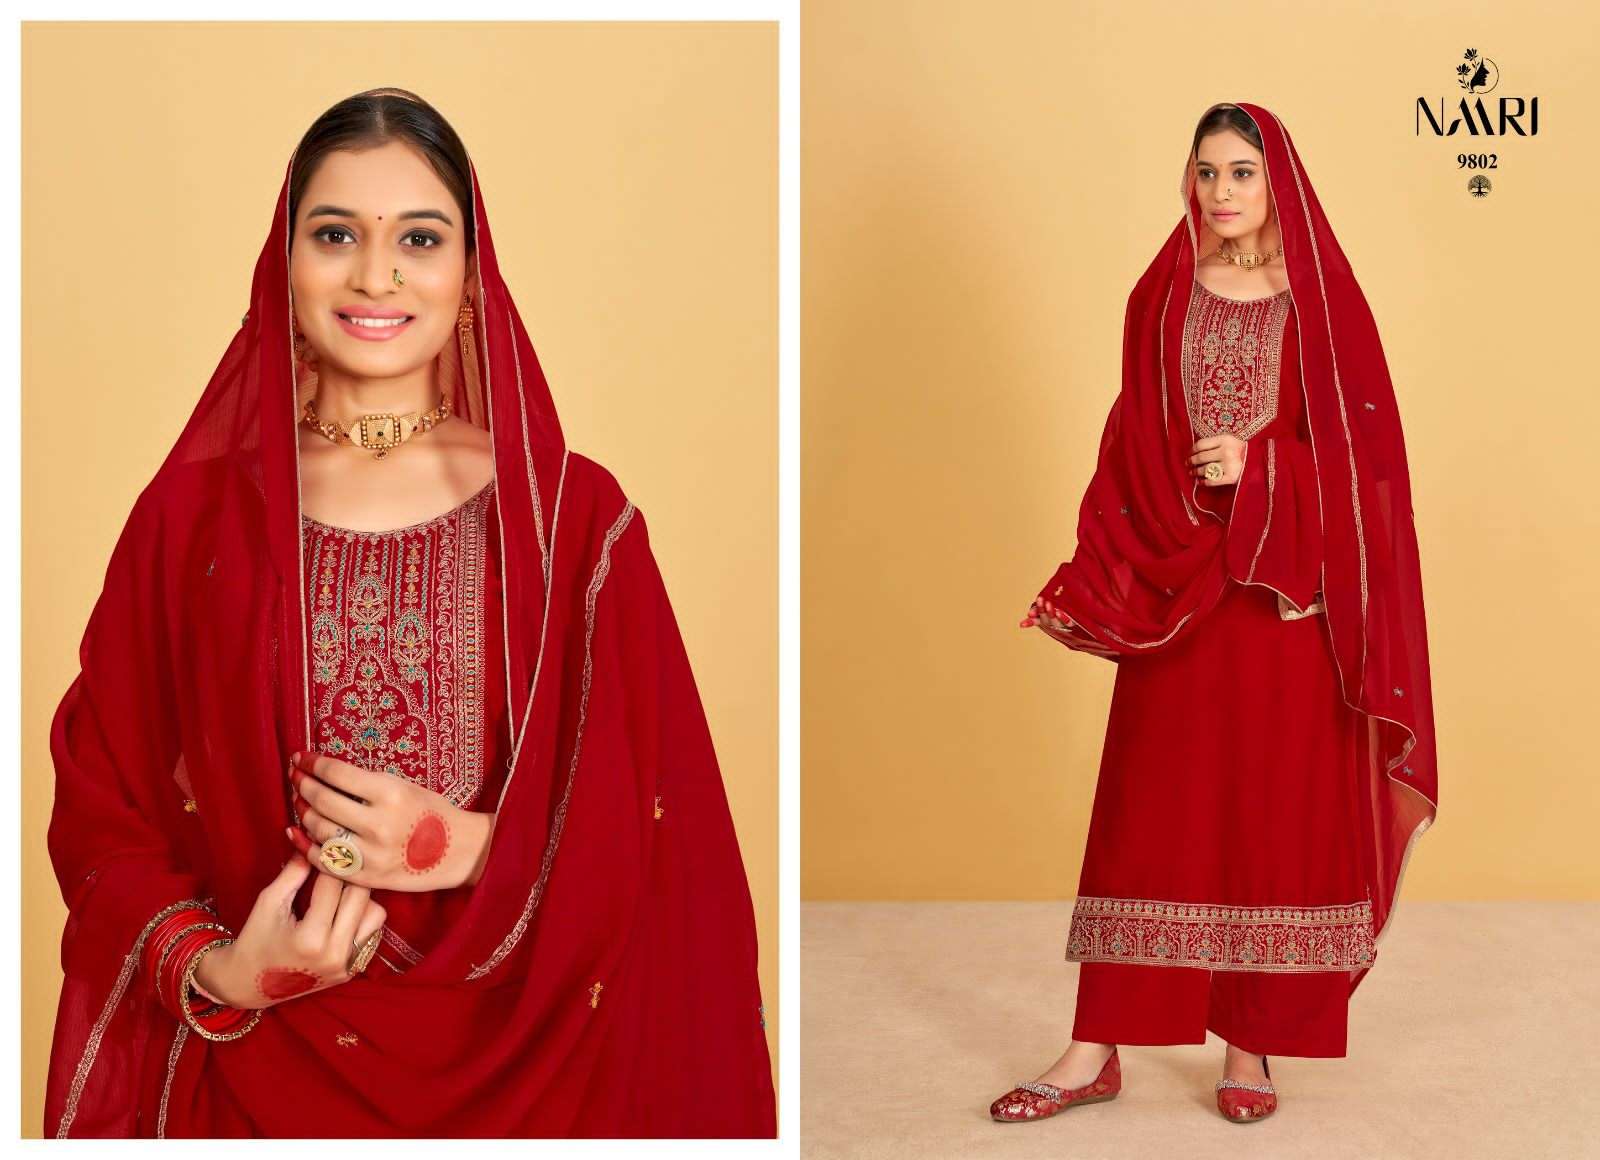 naari ishani new silk 9801-9804 series latest fancy salwar kameez wholesaler surat gujarat